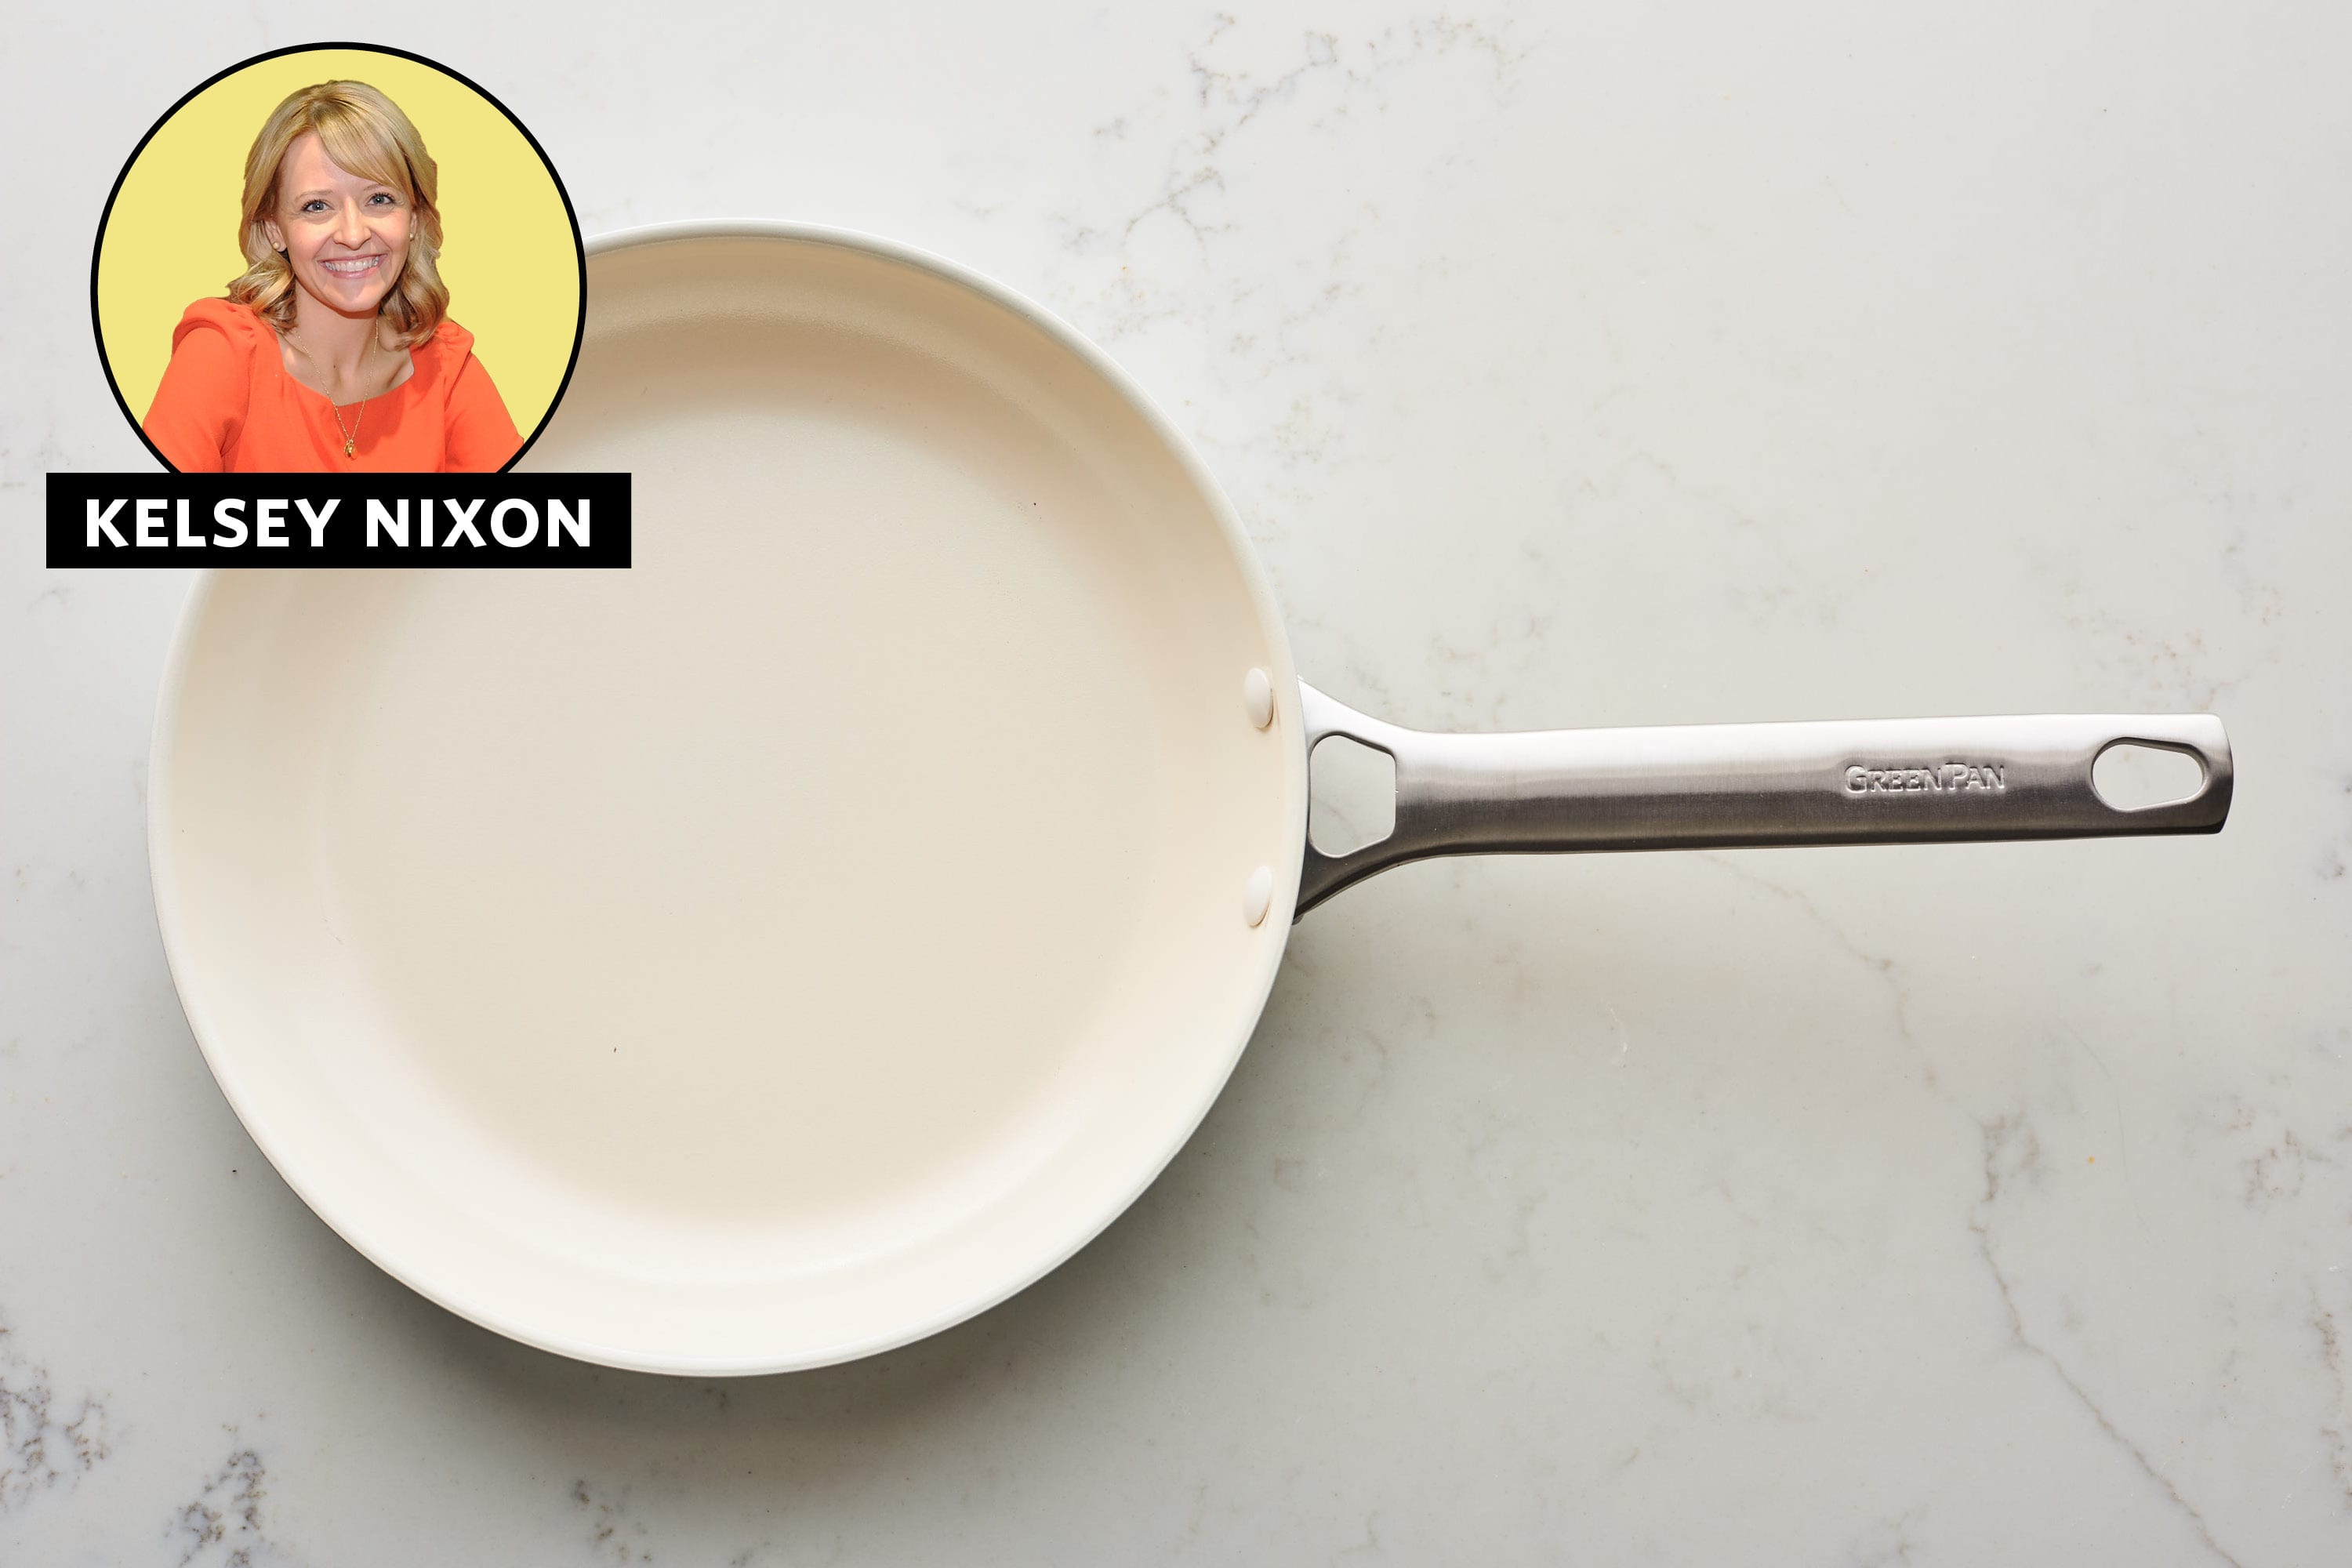 Gordon FLIPS OVER CHEF NOT USING A NON-STICK PAN